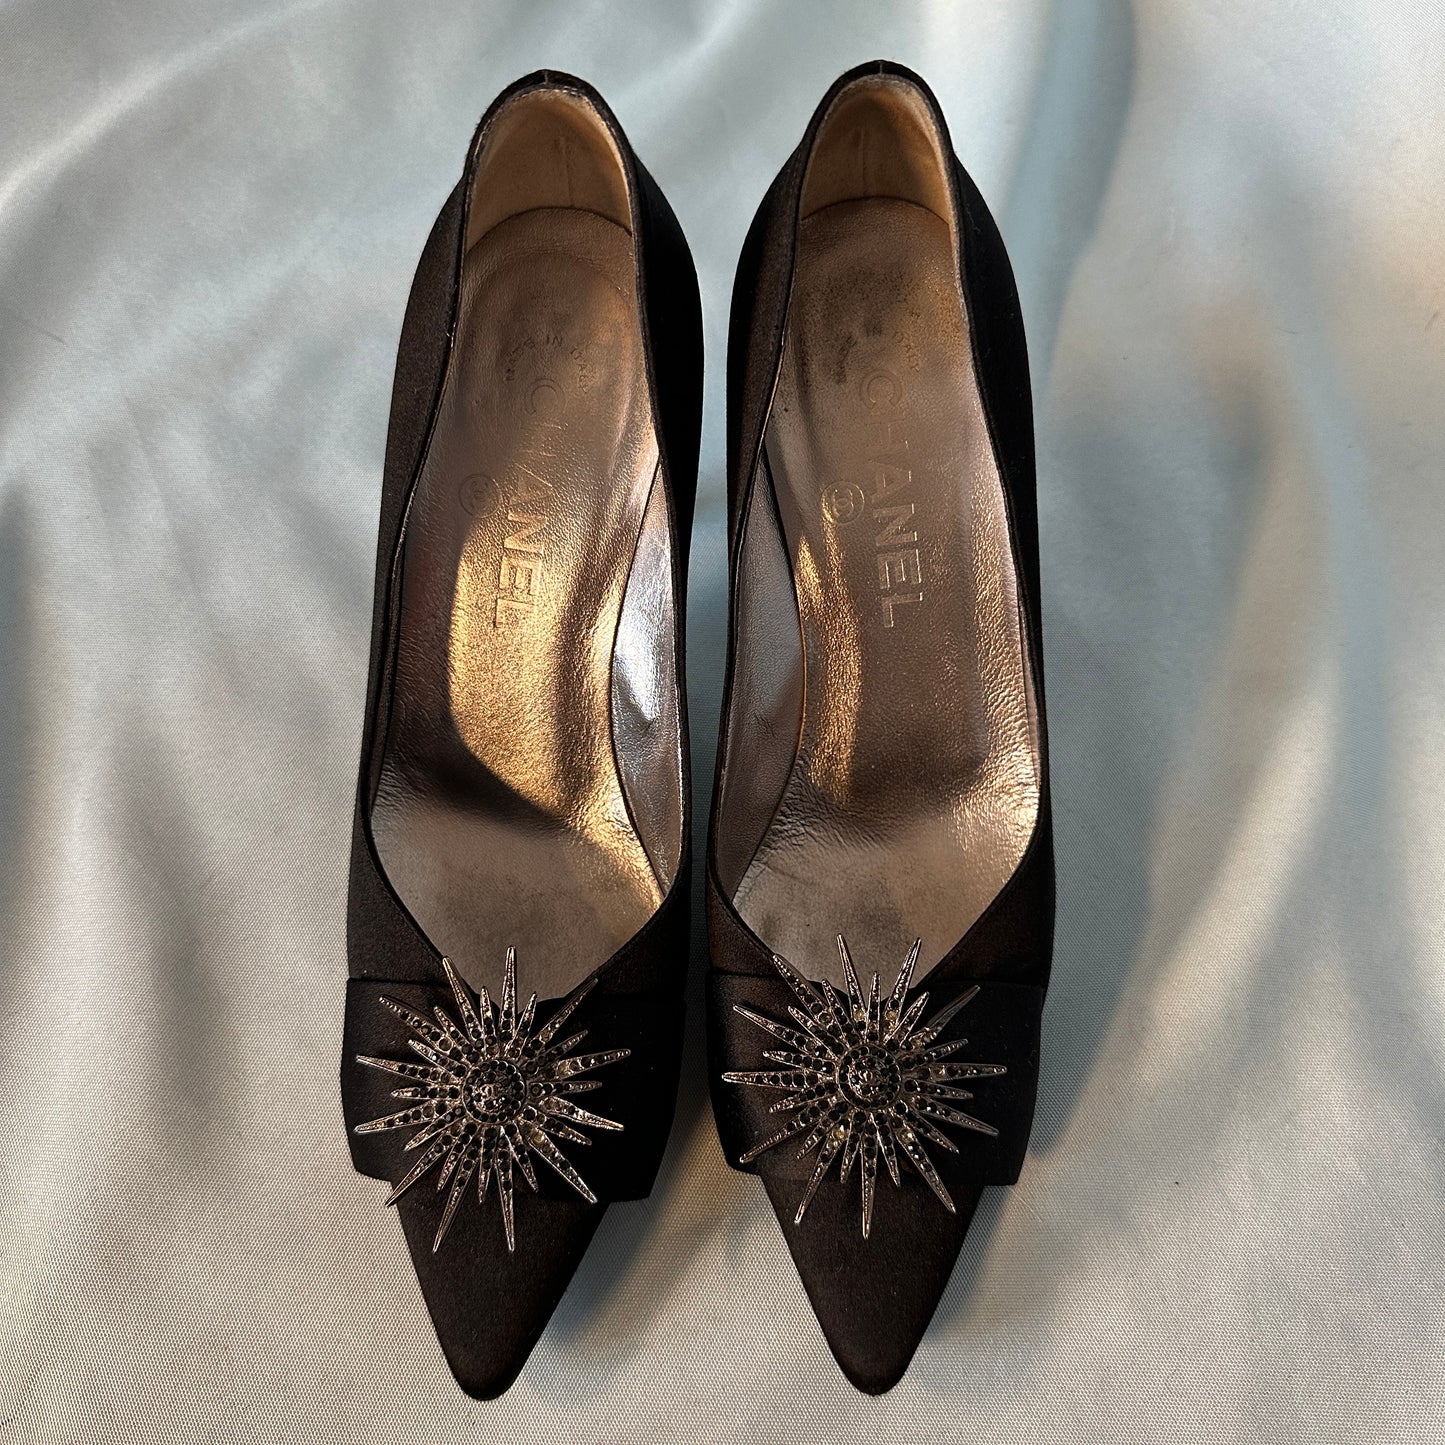 Chanel Crystal Black Satin Pointed Toe Heels